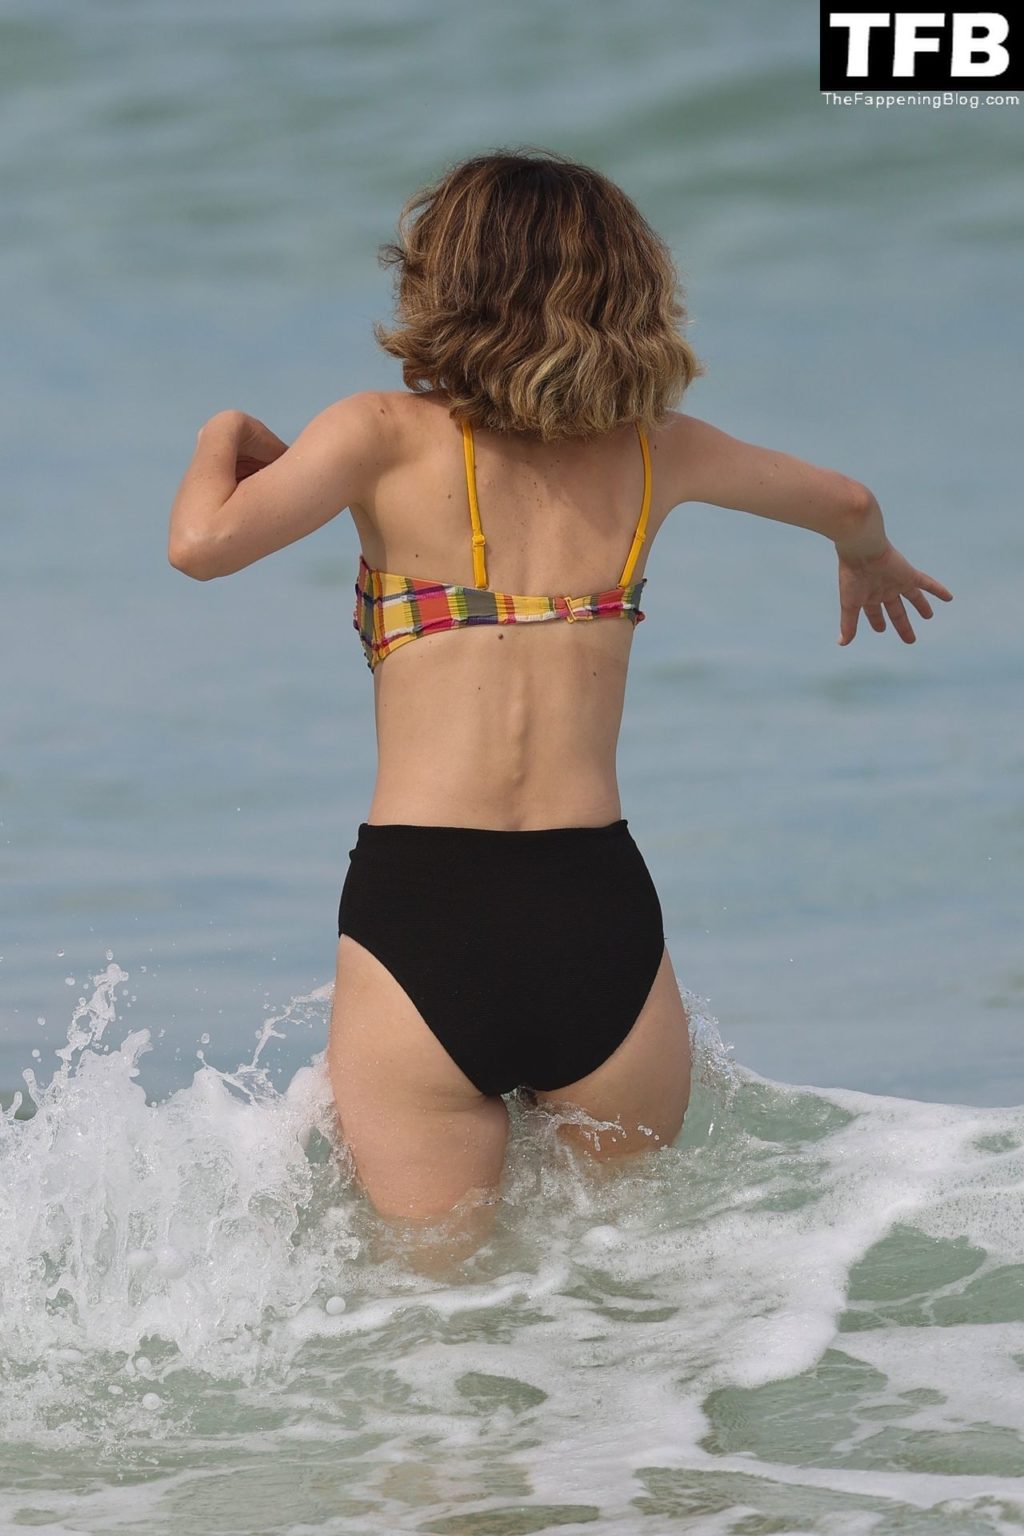 Rose Byrne &amp; Kick Gurry Enjoy a Day on the Beach in Sydney (90 Photos)